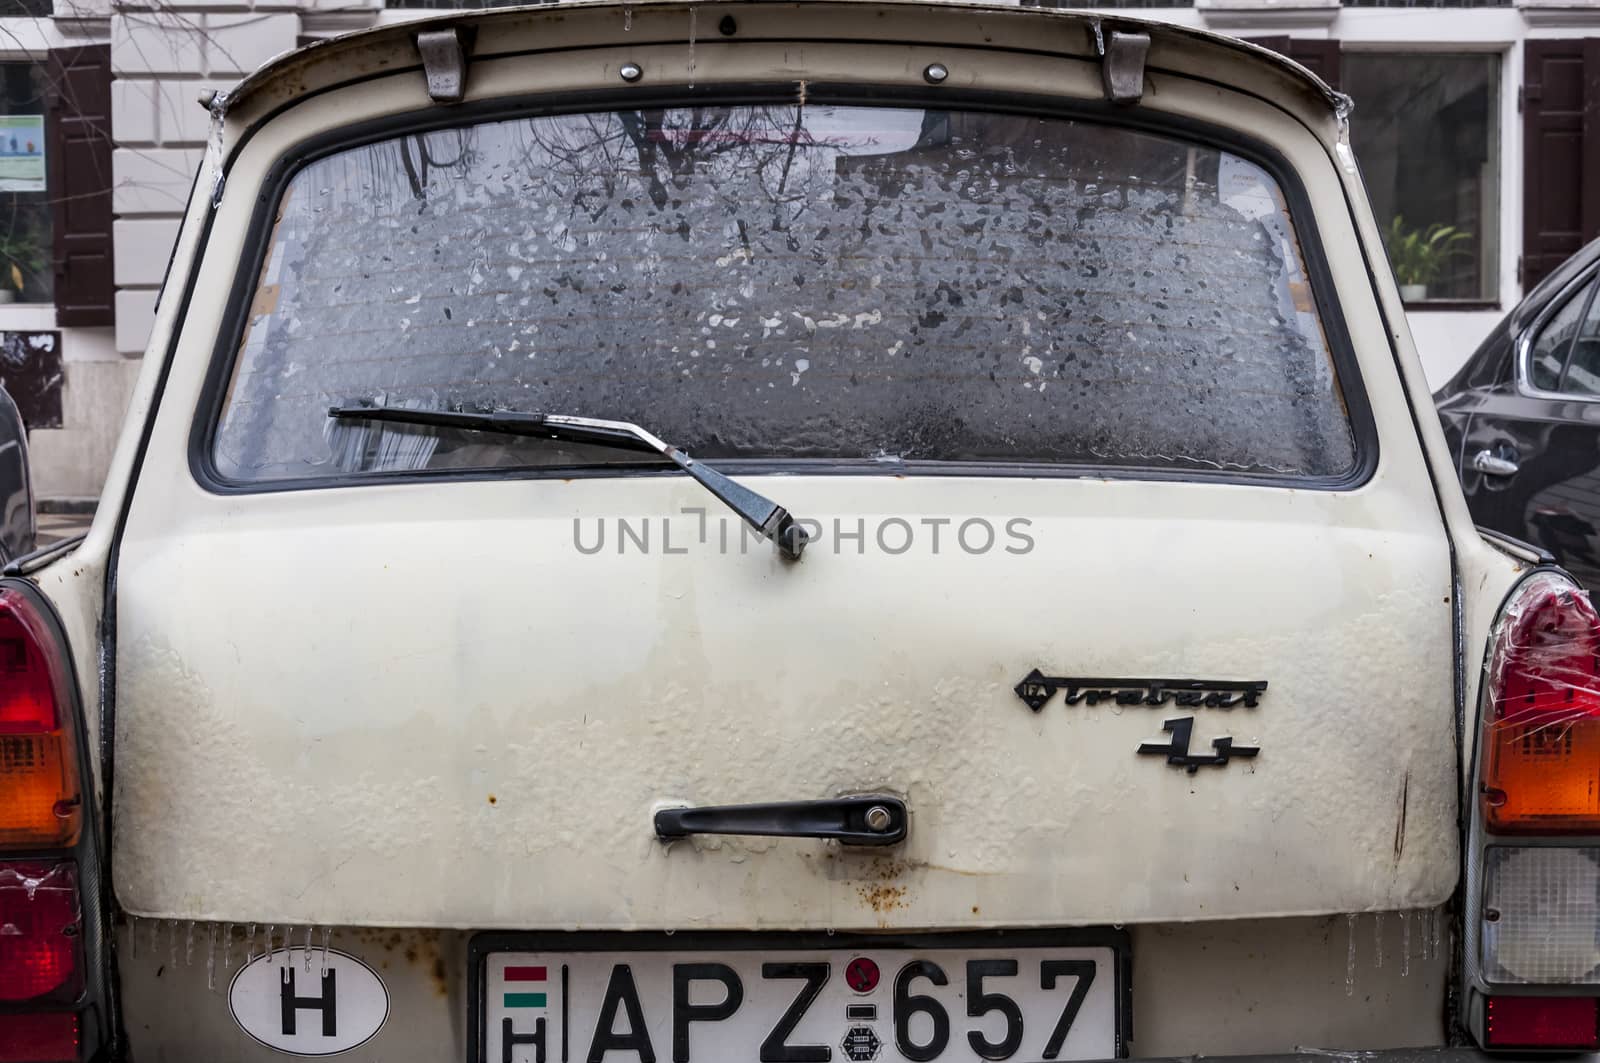 Budapest, Hungary - July 28, 2015: A Soviet-era Trabant car parked near St. Matthias Church